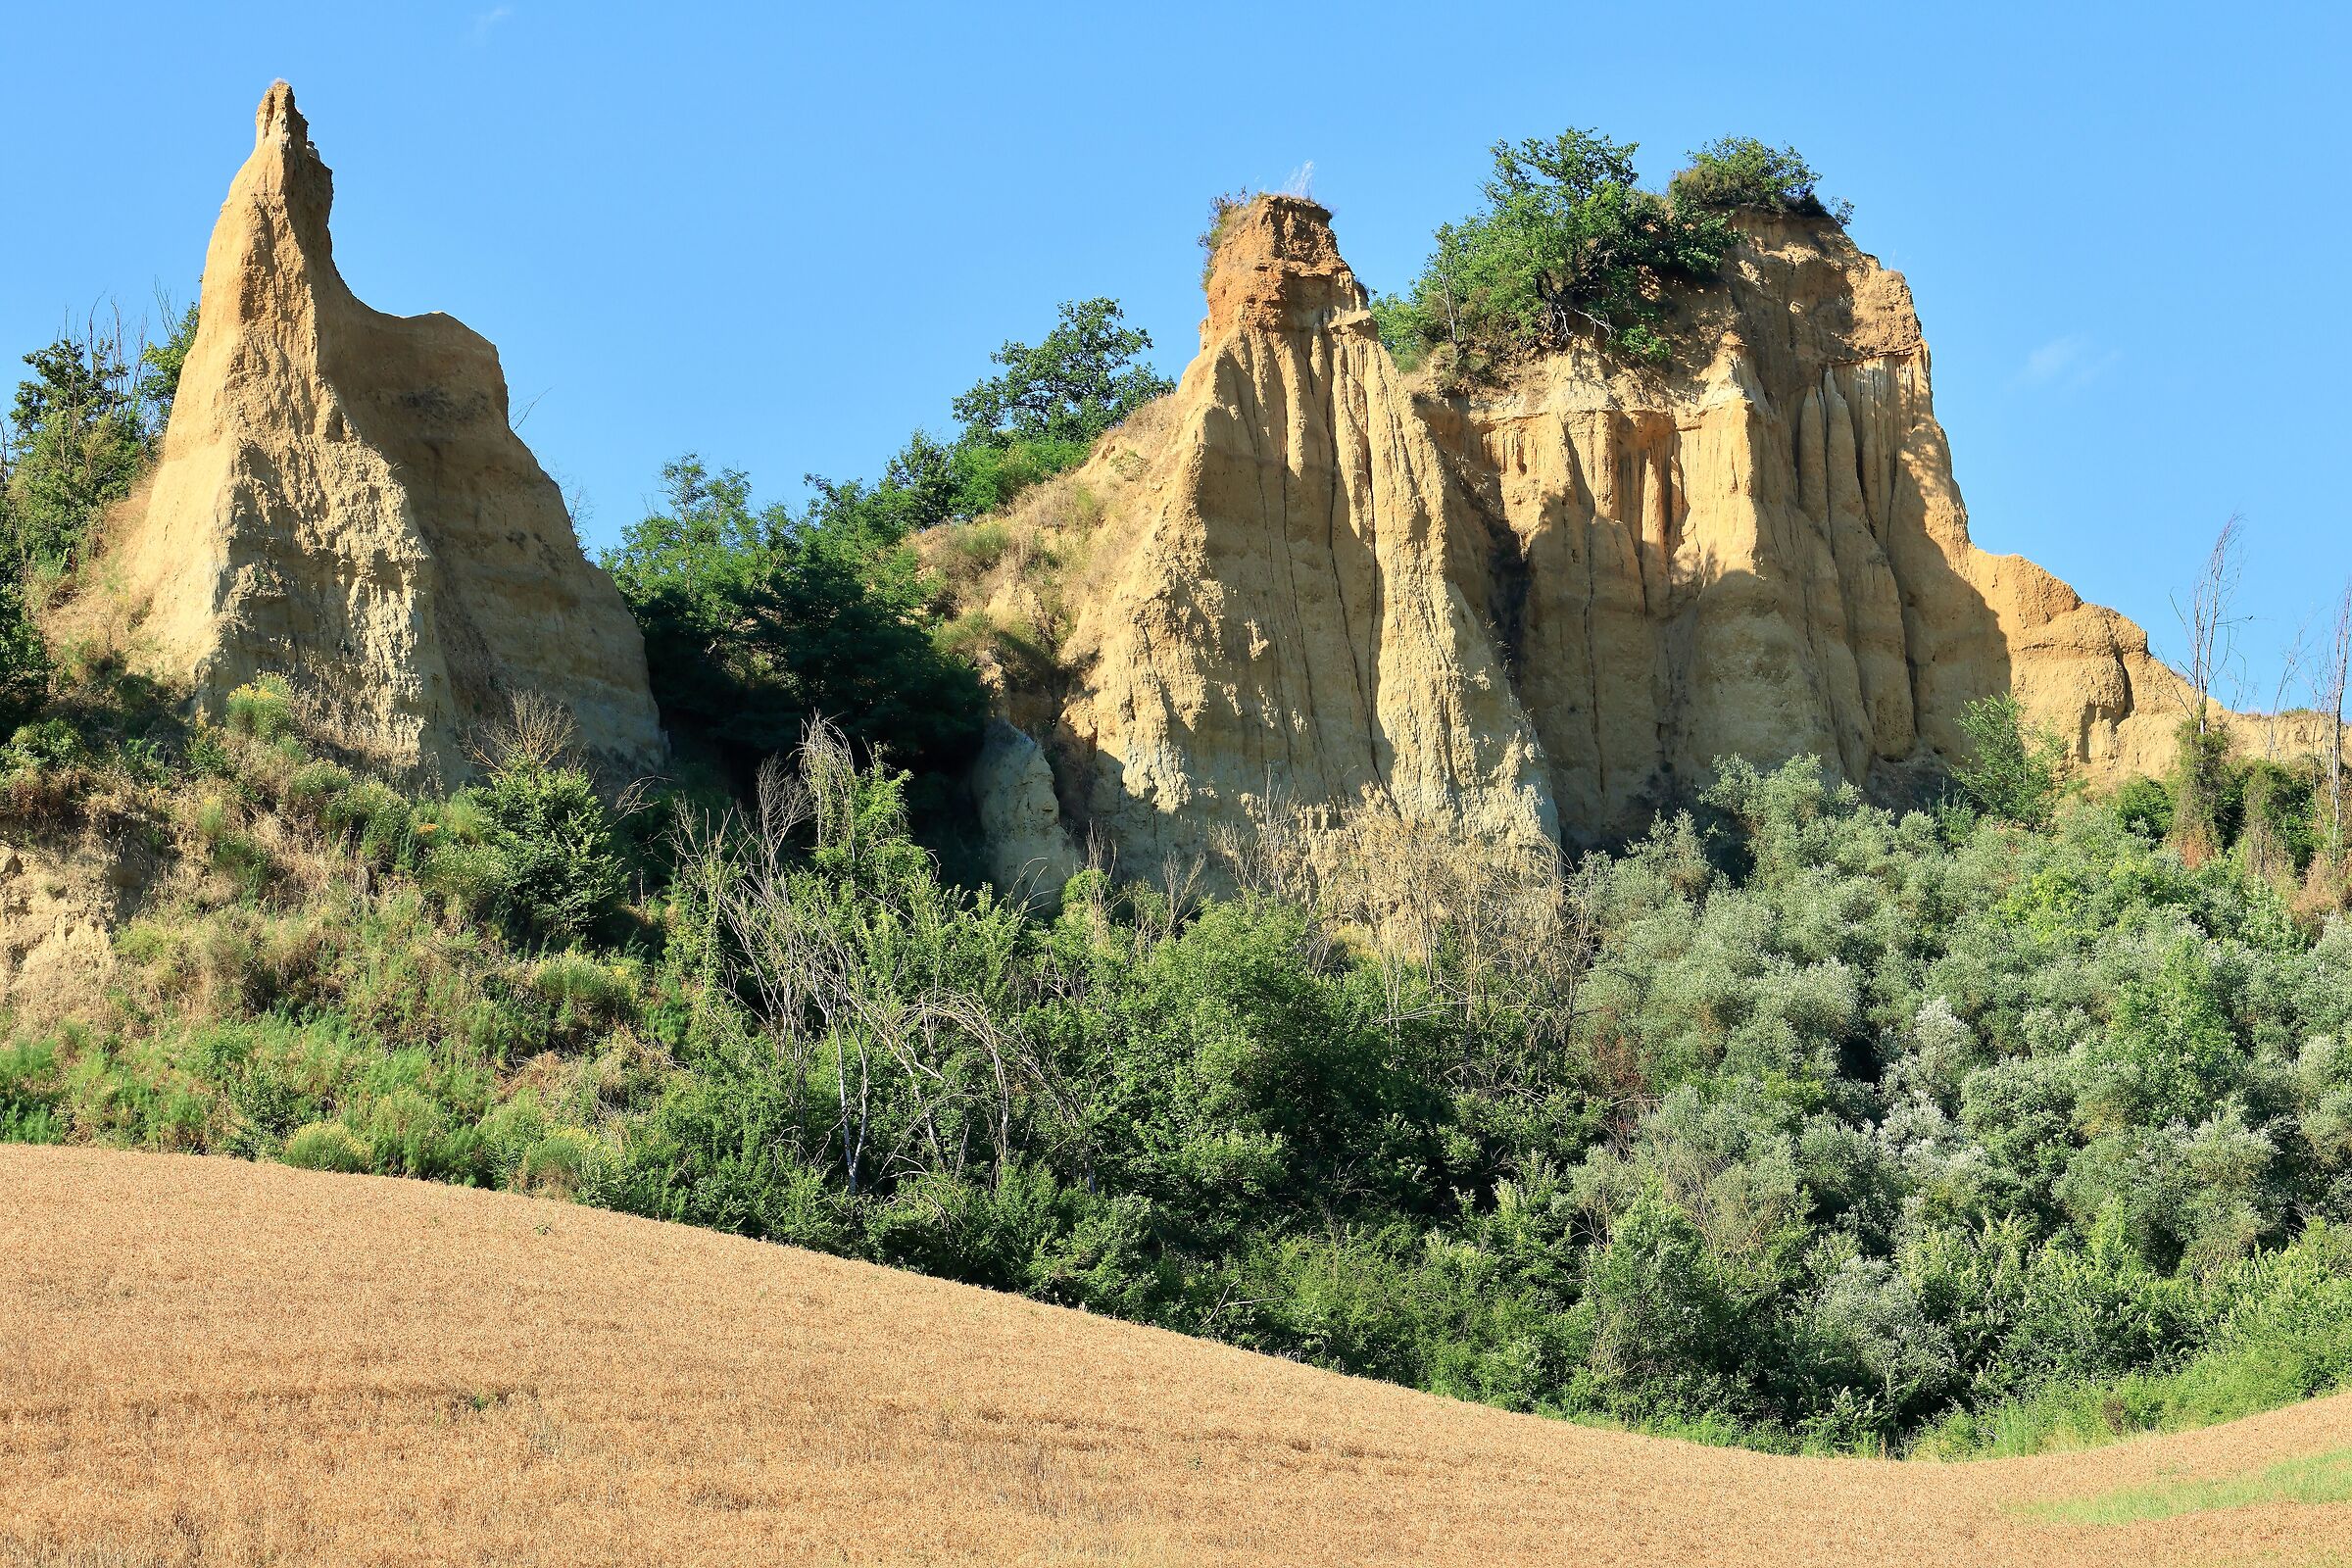 The cliffs of Valdarno...